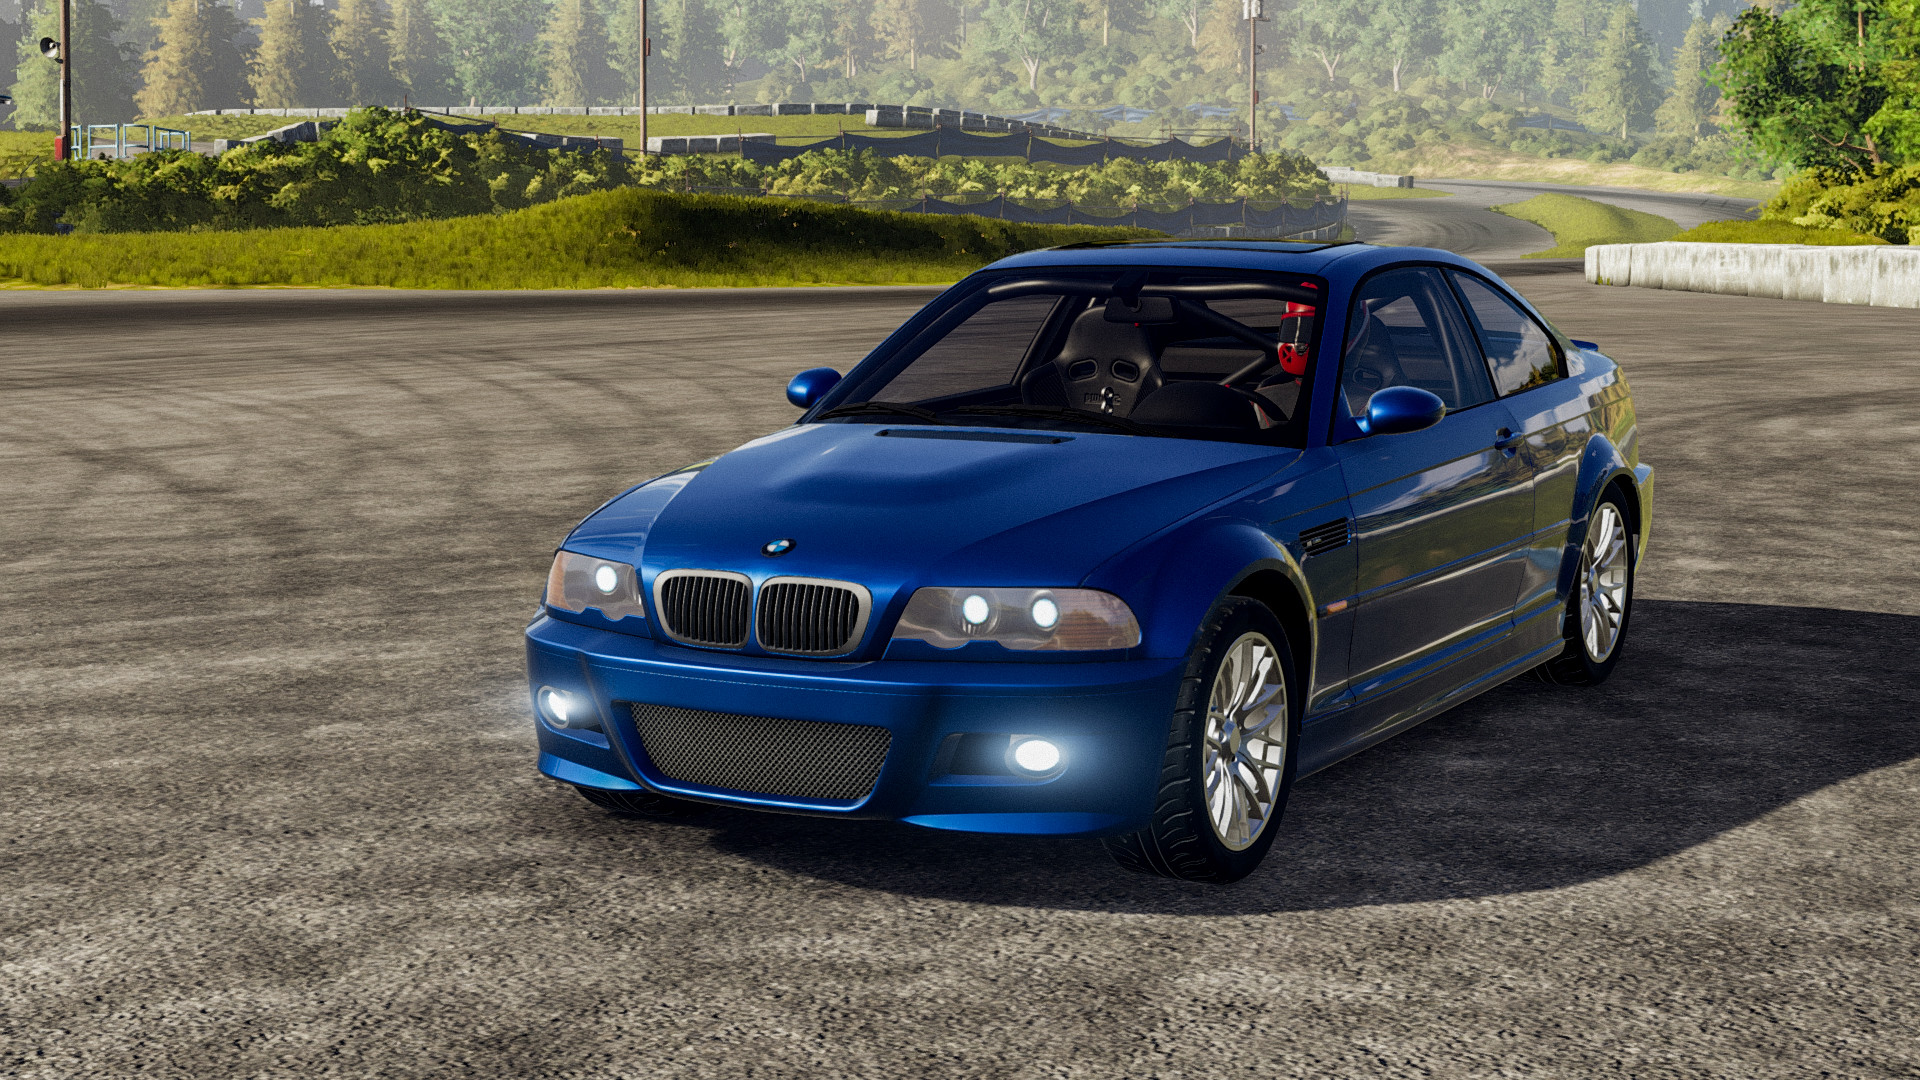 CarX Drift Racing Online, BMW, BMW E30, drift, drift cars, Drift missile,  tuning, car, video games